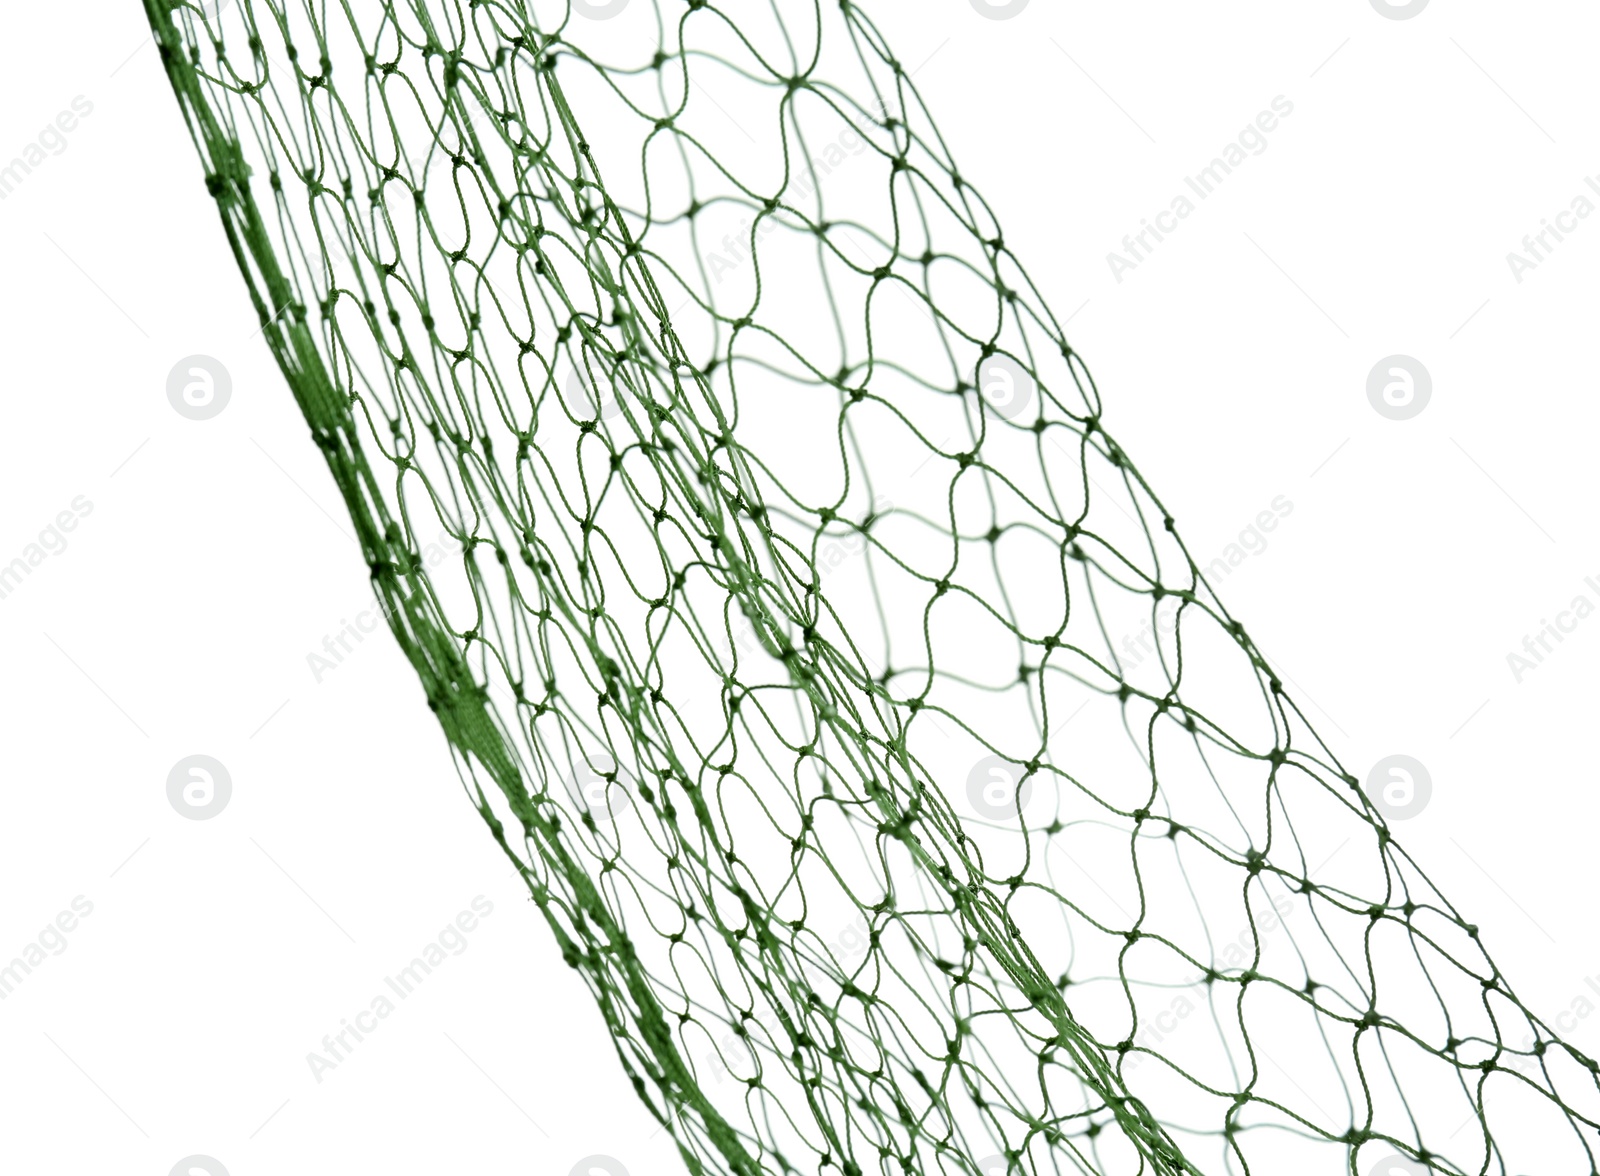 Photo of Fishing net on white background, closeup view